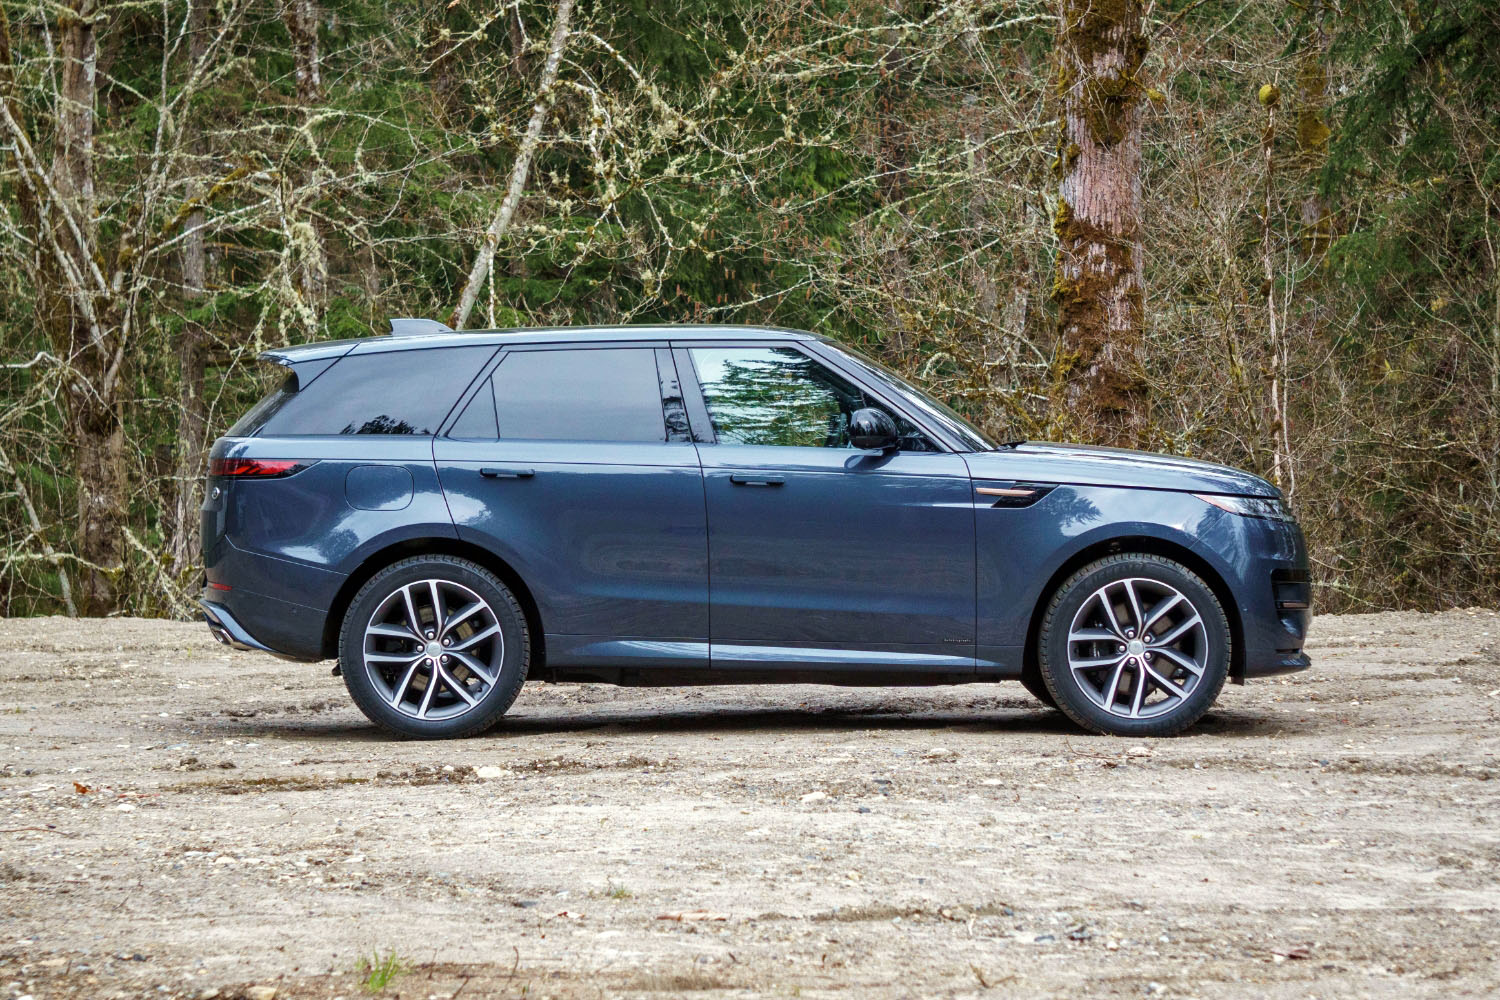 2023 Land Rover Range Rover Sport PHEV in Varesine Blue parked on dirt, side-profile view.